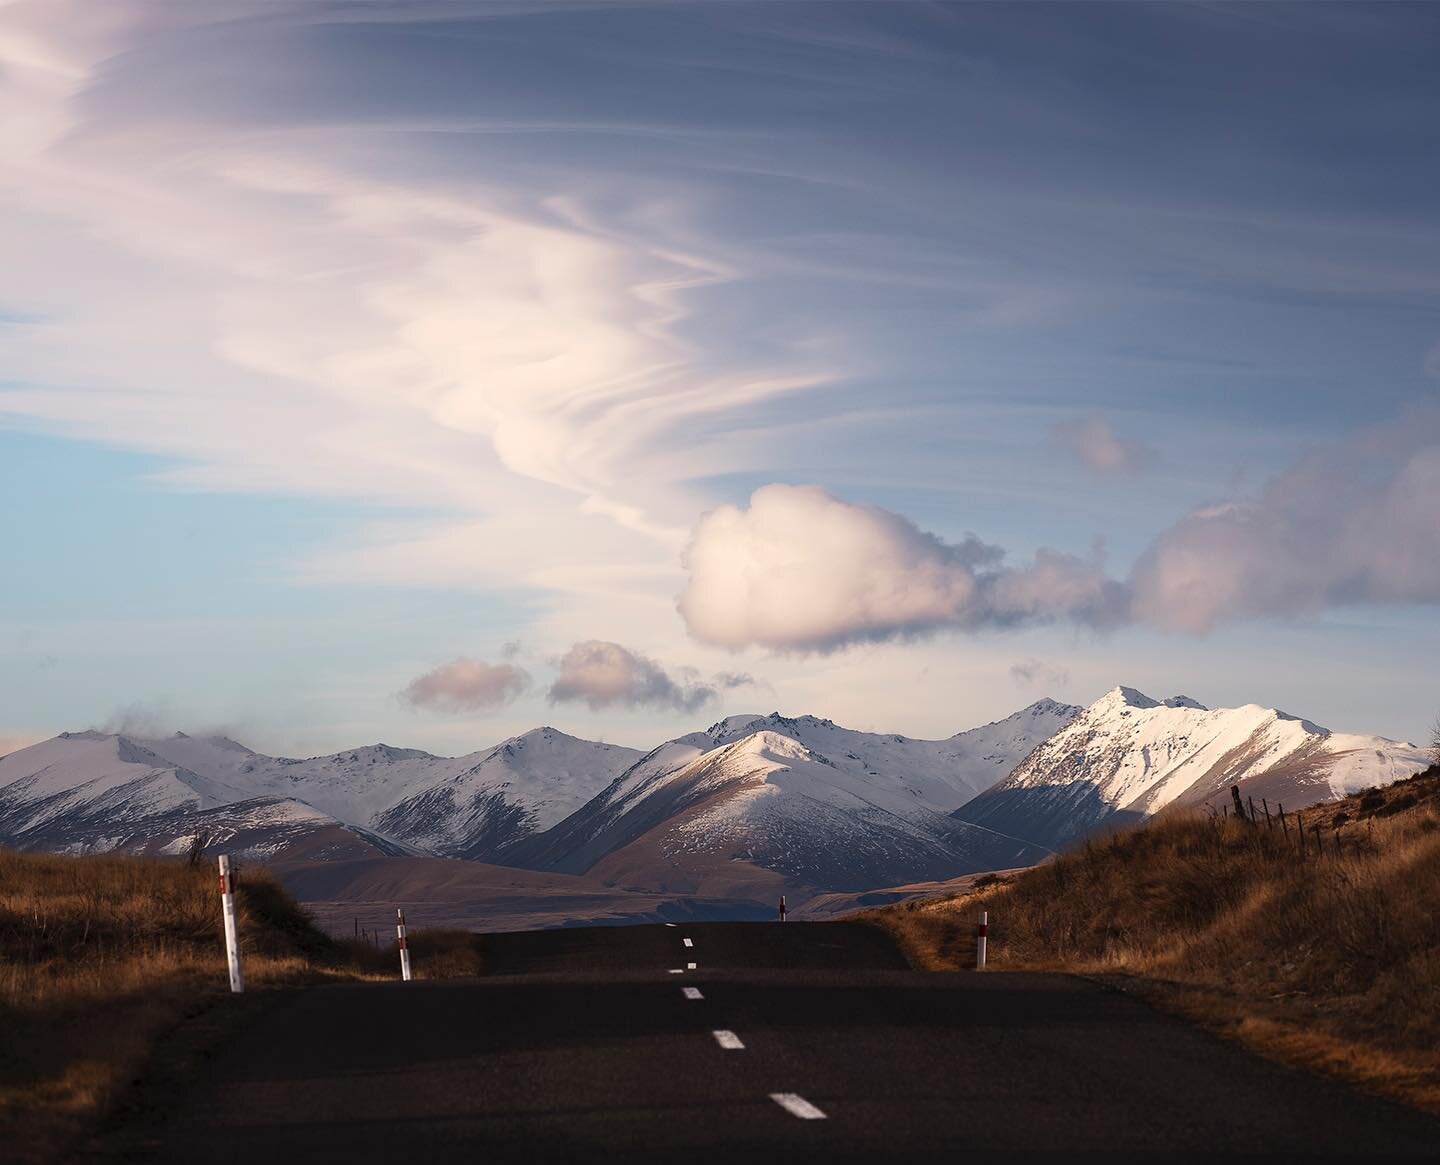 fugacious
..
..
..
..
#fleetingbeauty #road #clouds #sunset #tekapo #mountjohn #nz #newzealand #southisland #nzmustdo #fujifilm #gfx50s #roadtrip